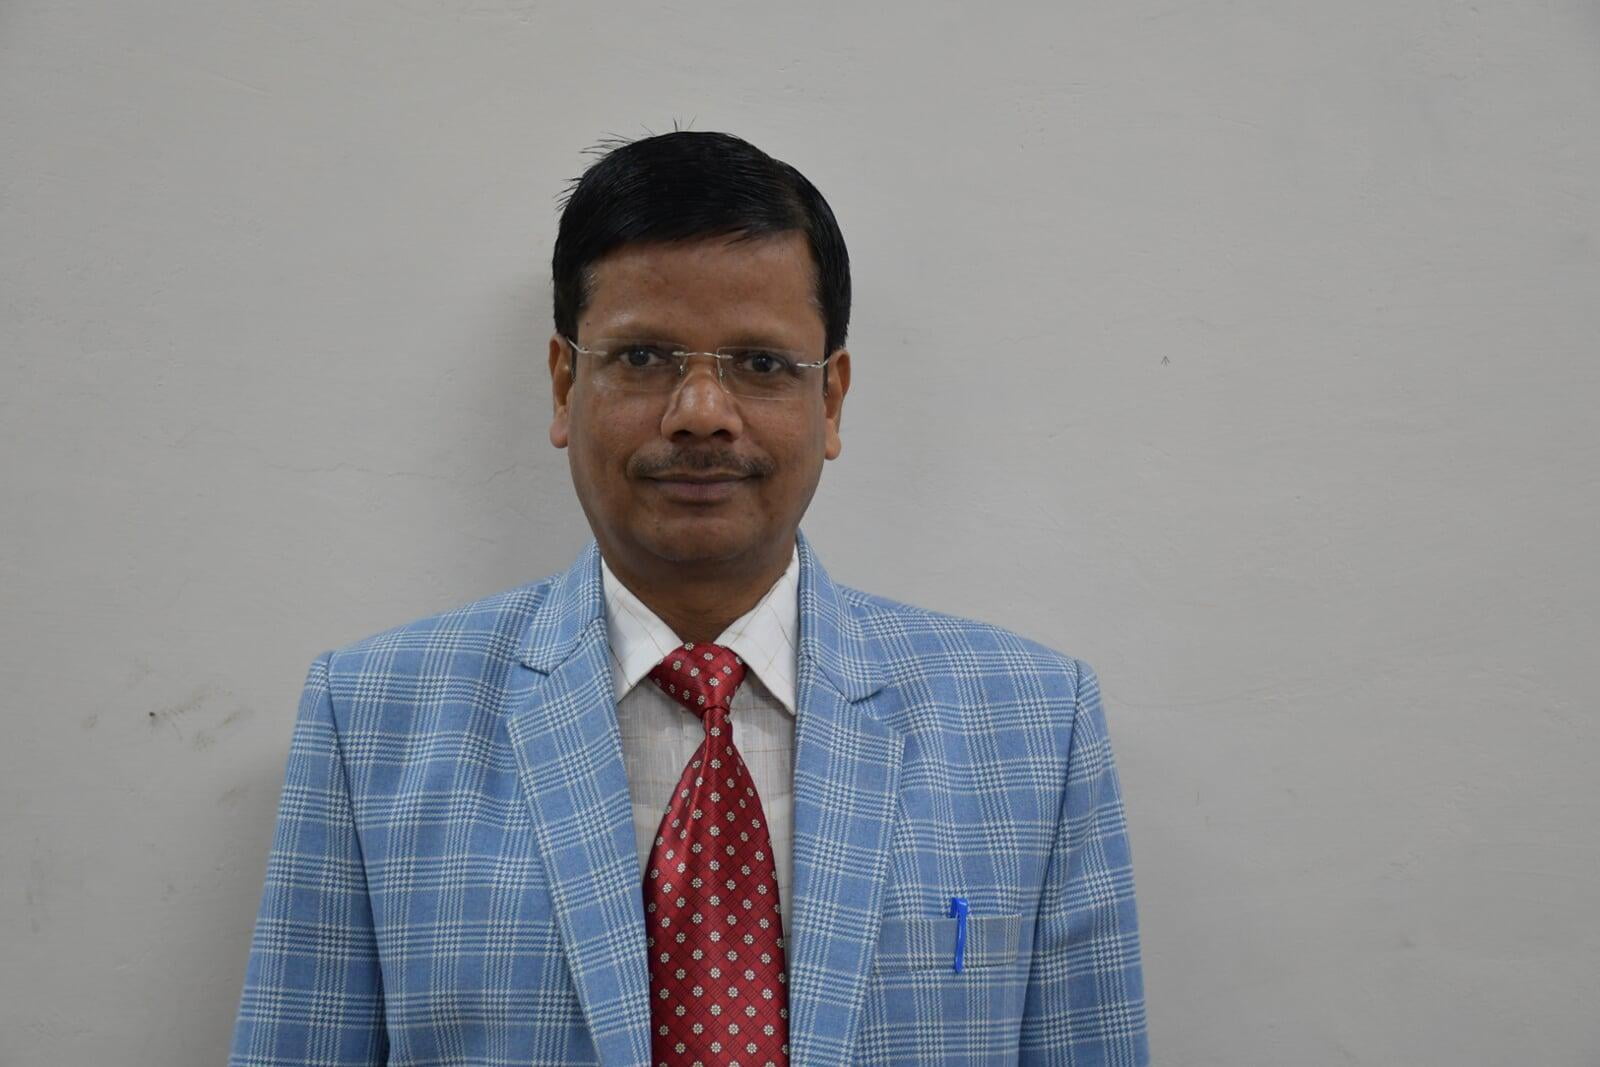 Dr. Om Prakash Chaudhary B.Tech Civil Engineering Faculty at ITS